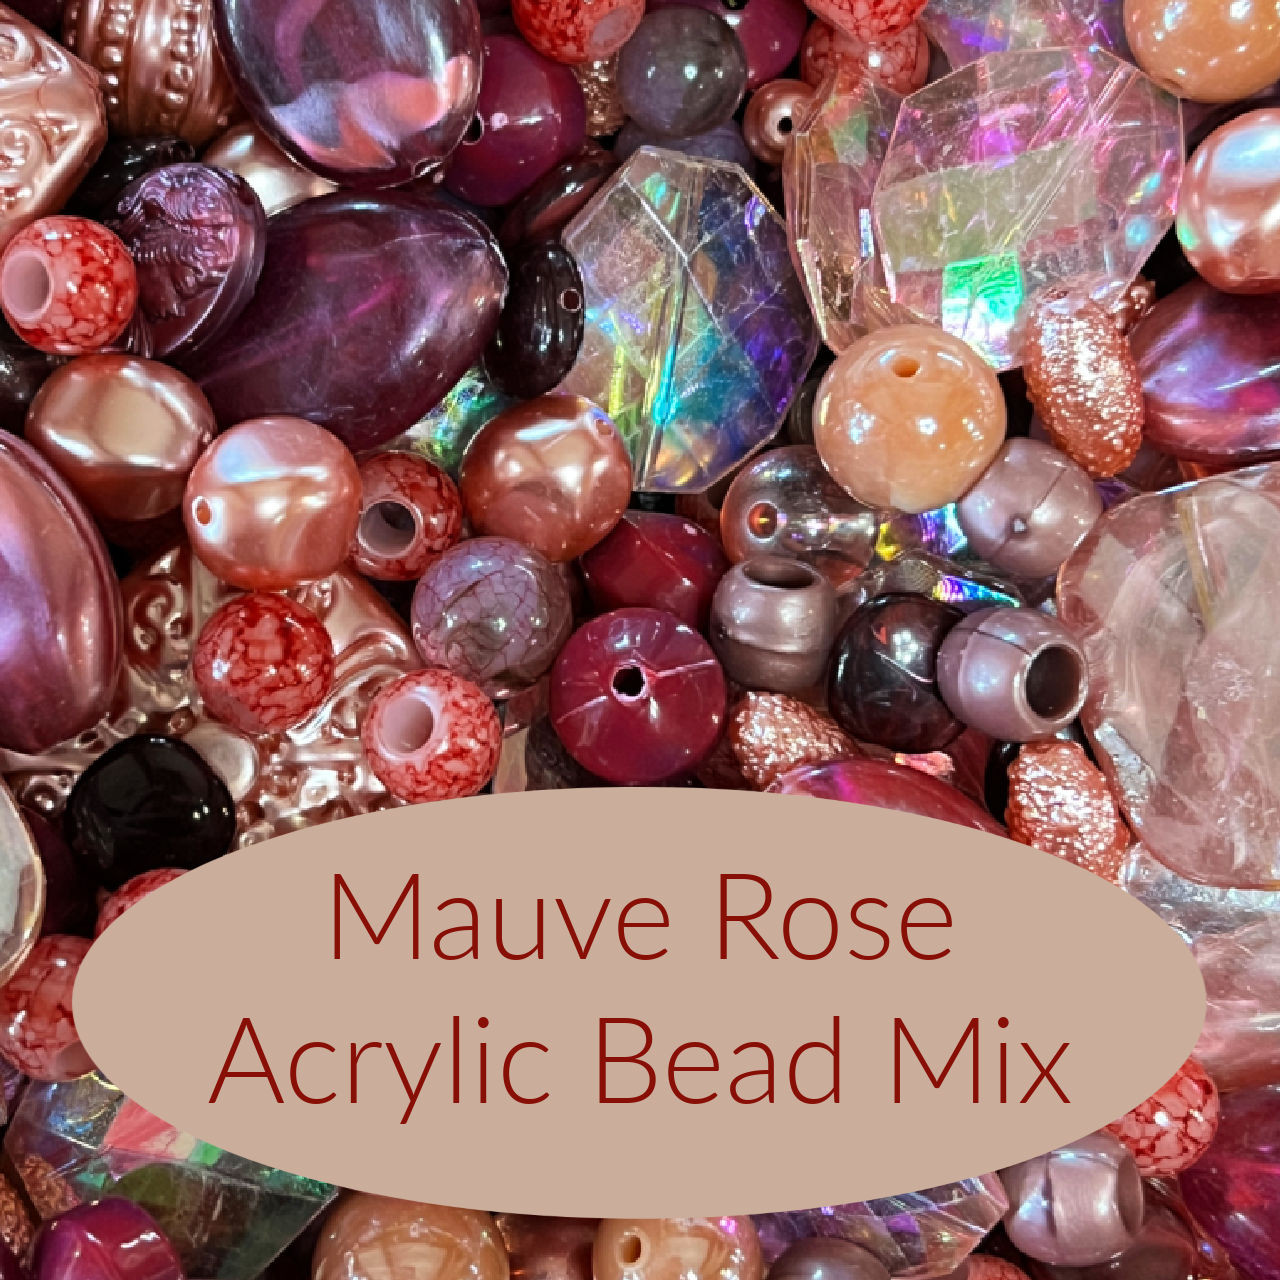 Mauve Rose Acrylic Bead Mix